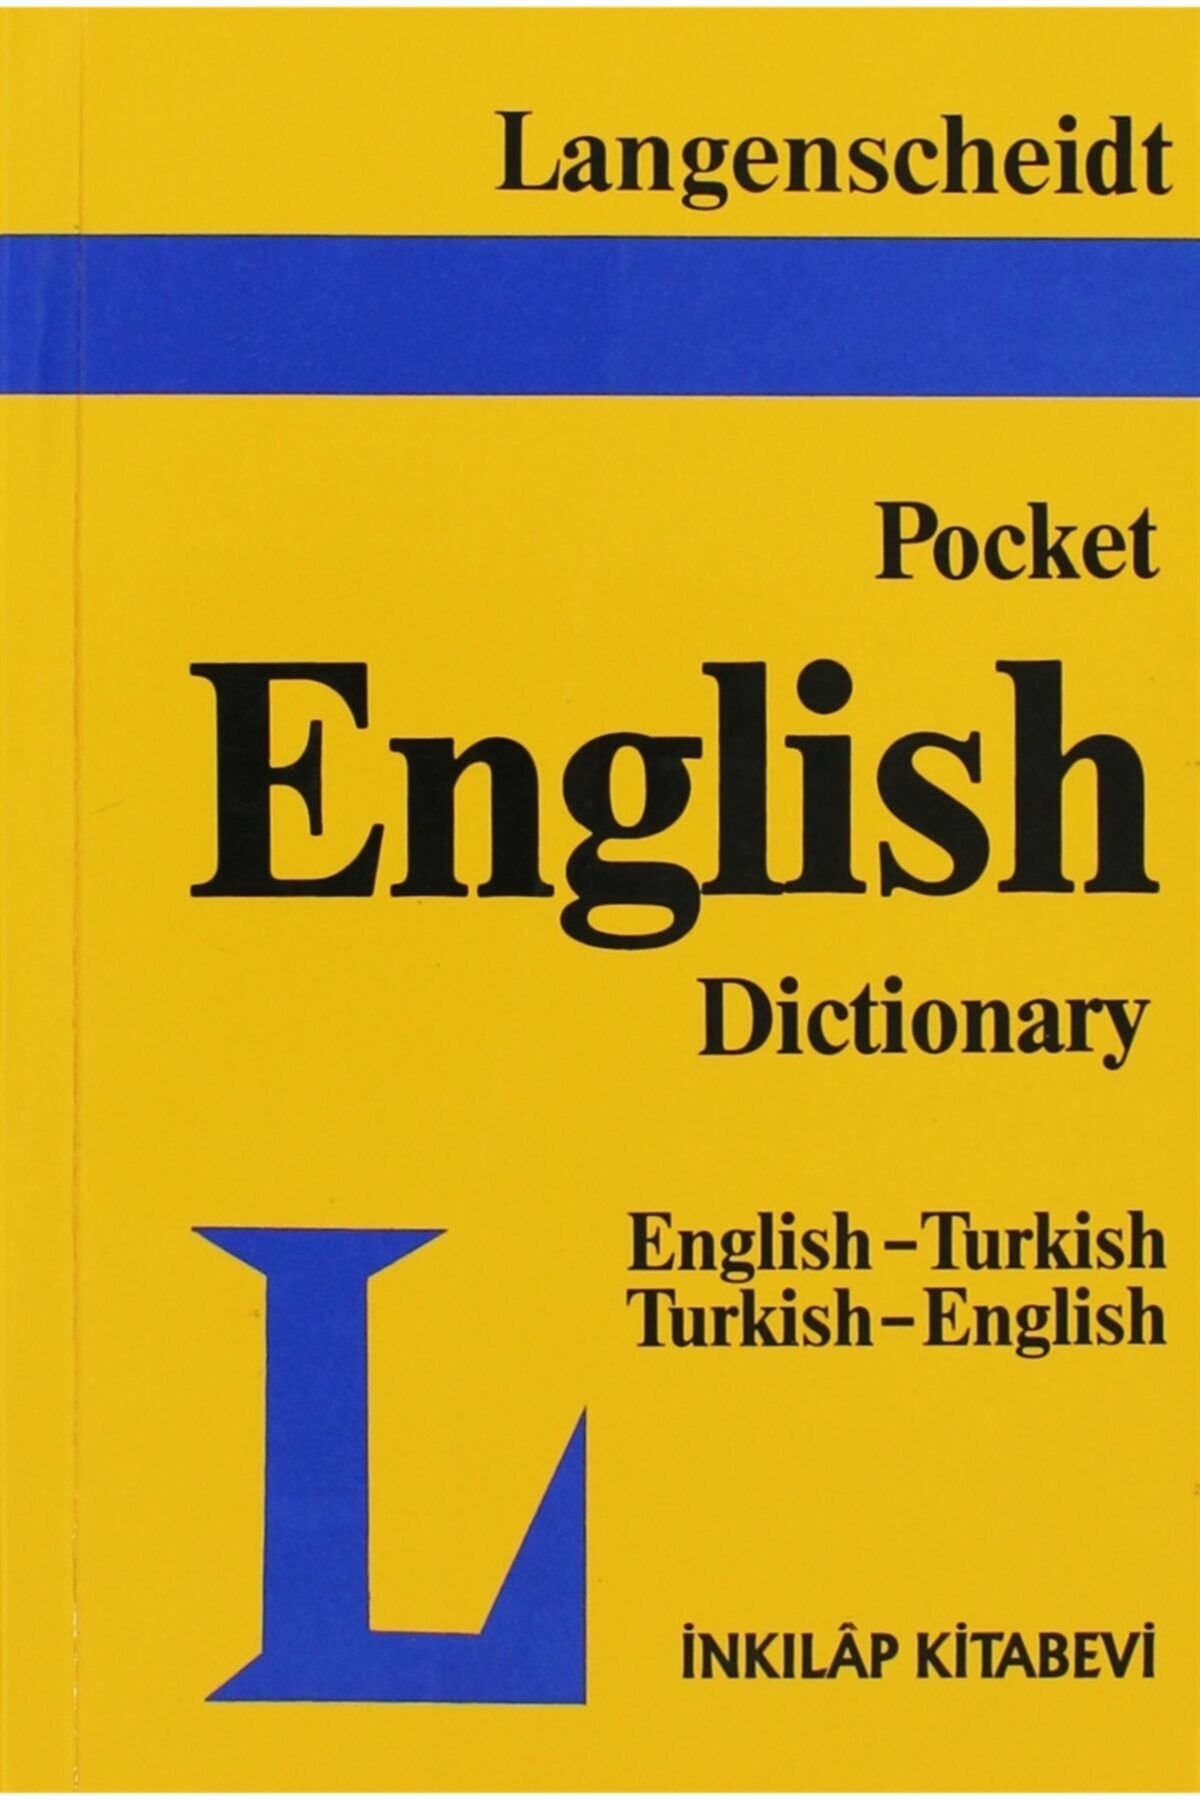 İnkılap Kitabevi Langenscheidt Pocket English Dictionary English-turkish / Turkish-english